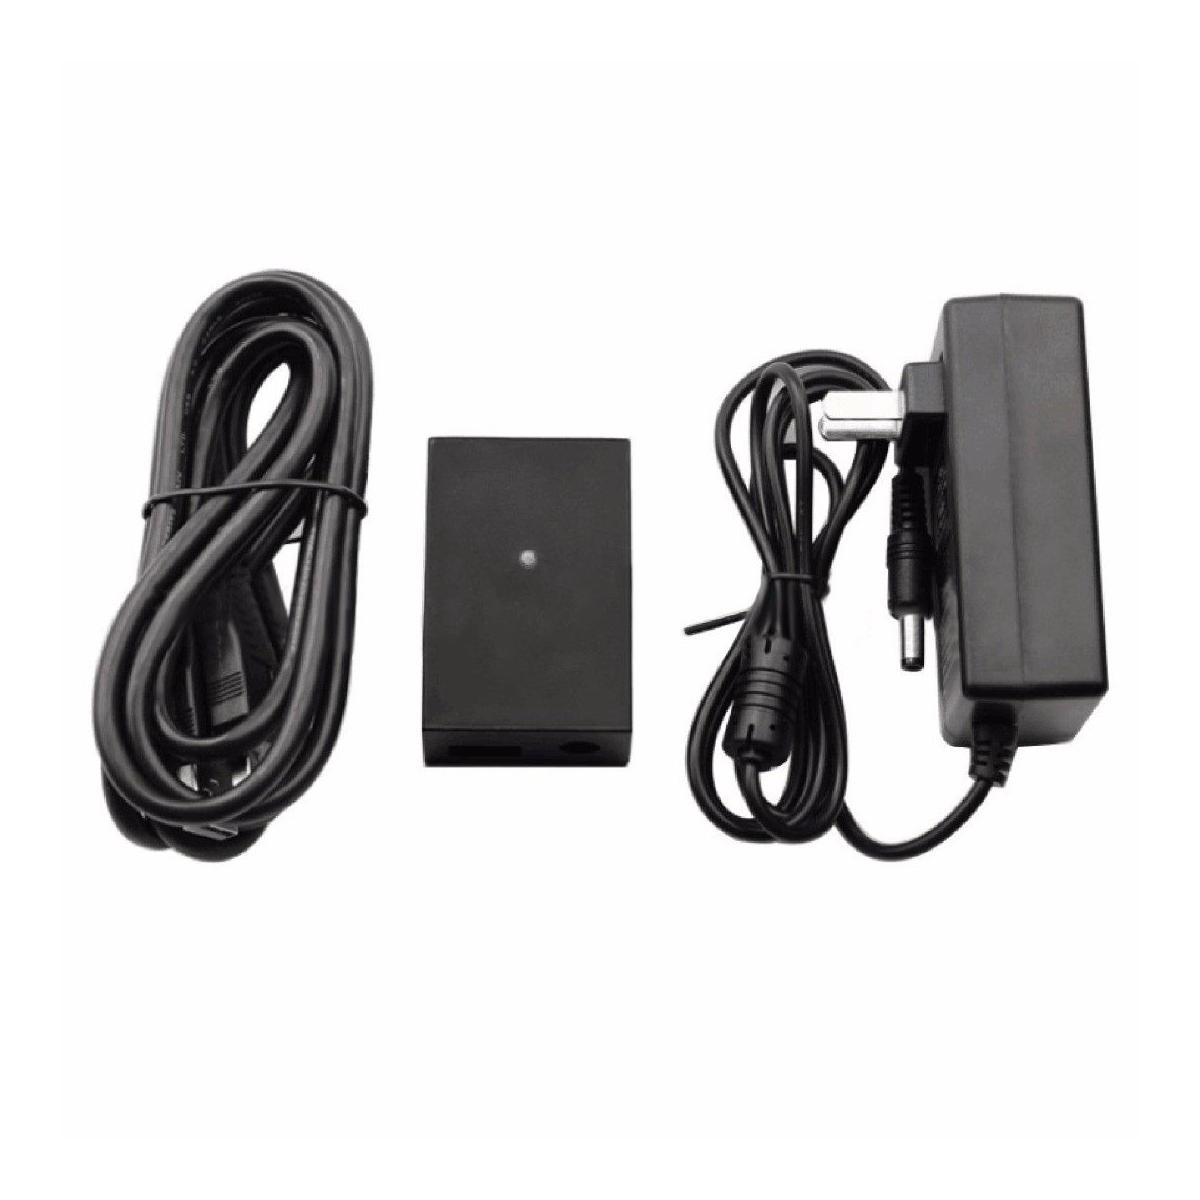 Image of Power 20 Power AC Adapter US/EU/AU Plug PC Development Kit For Xbox One S/X Kinect